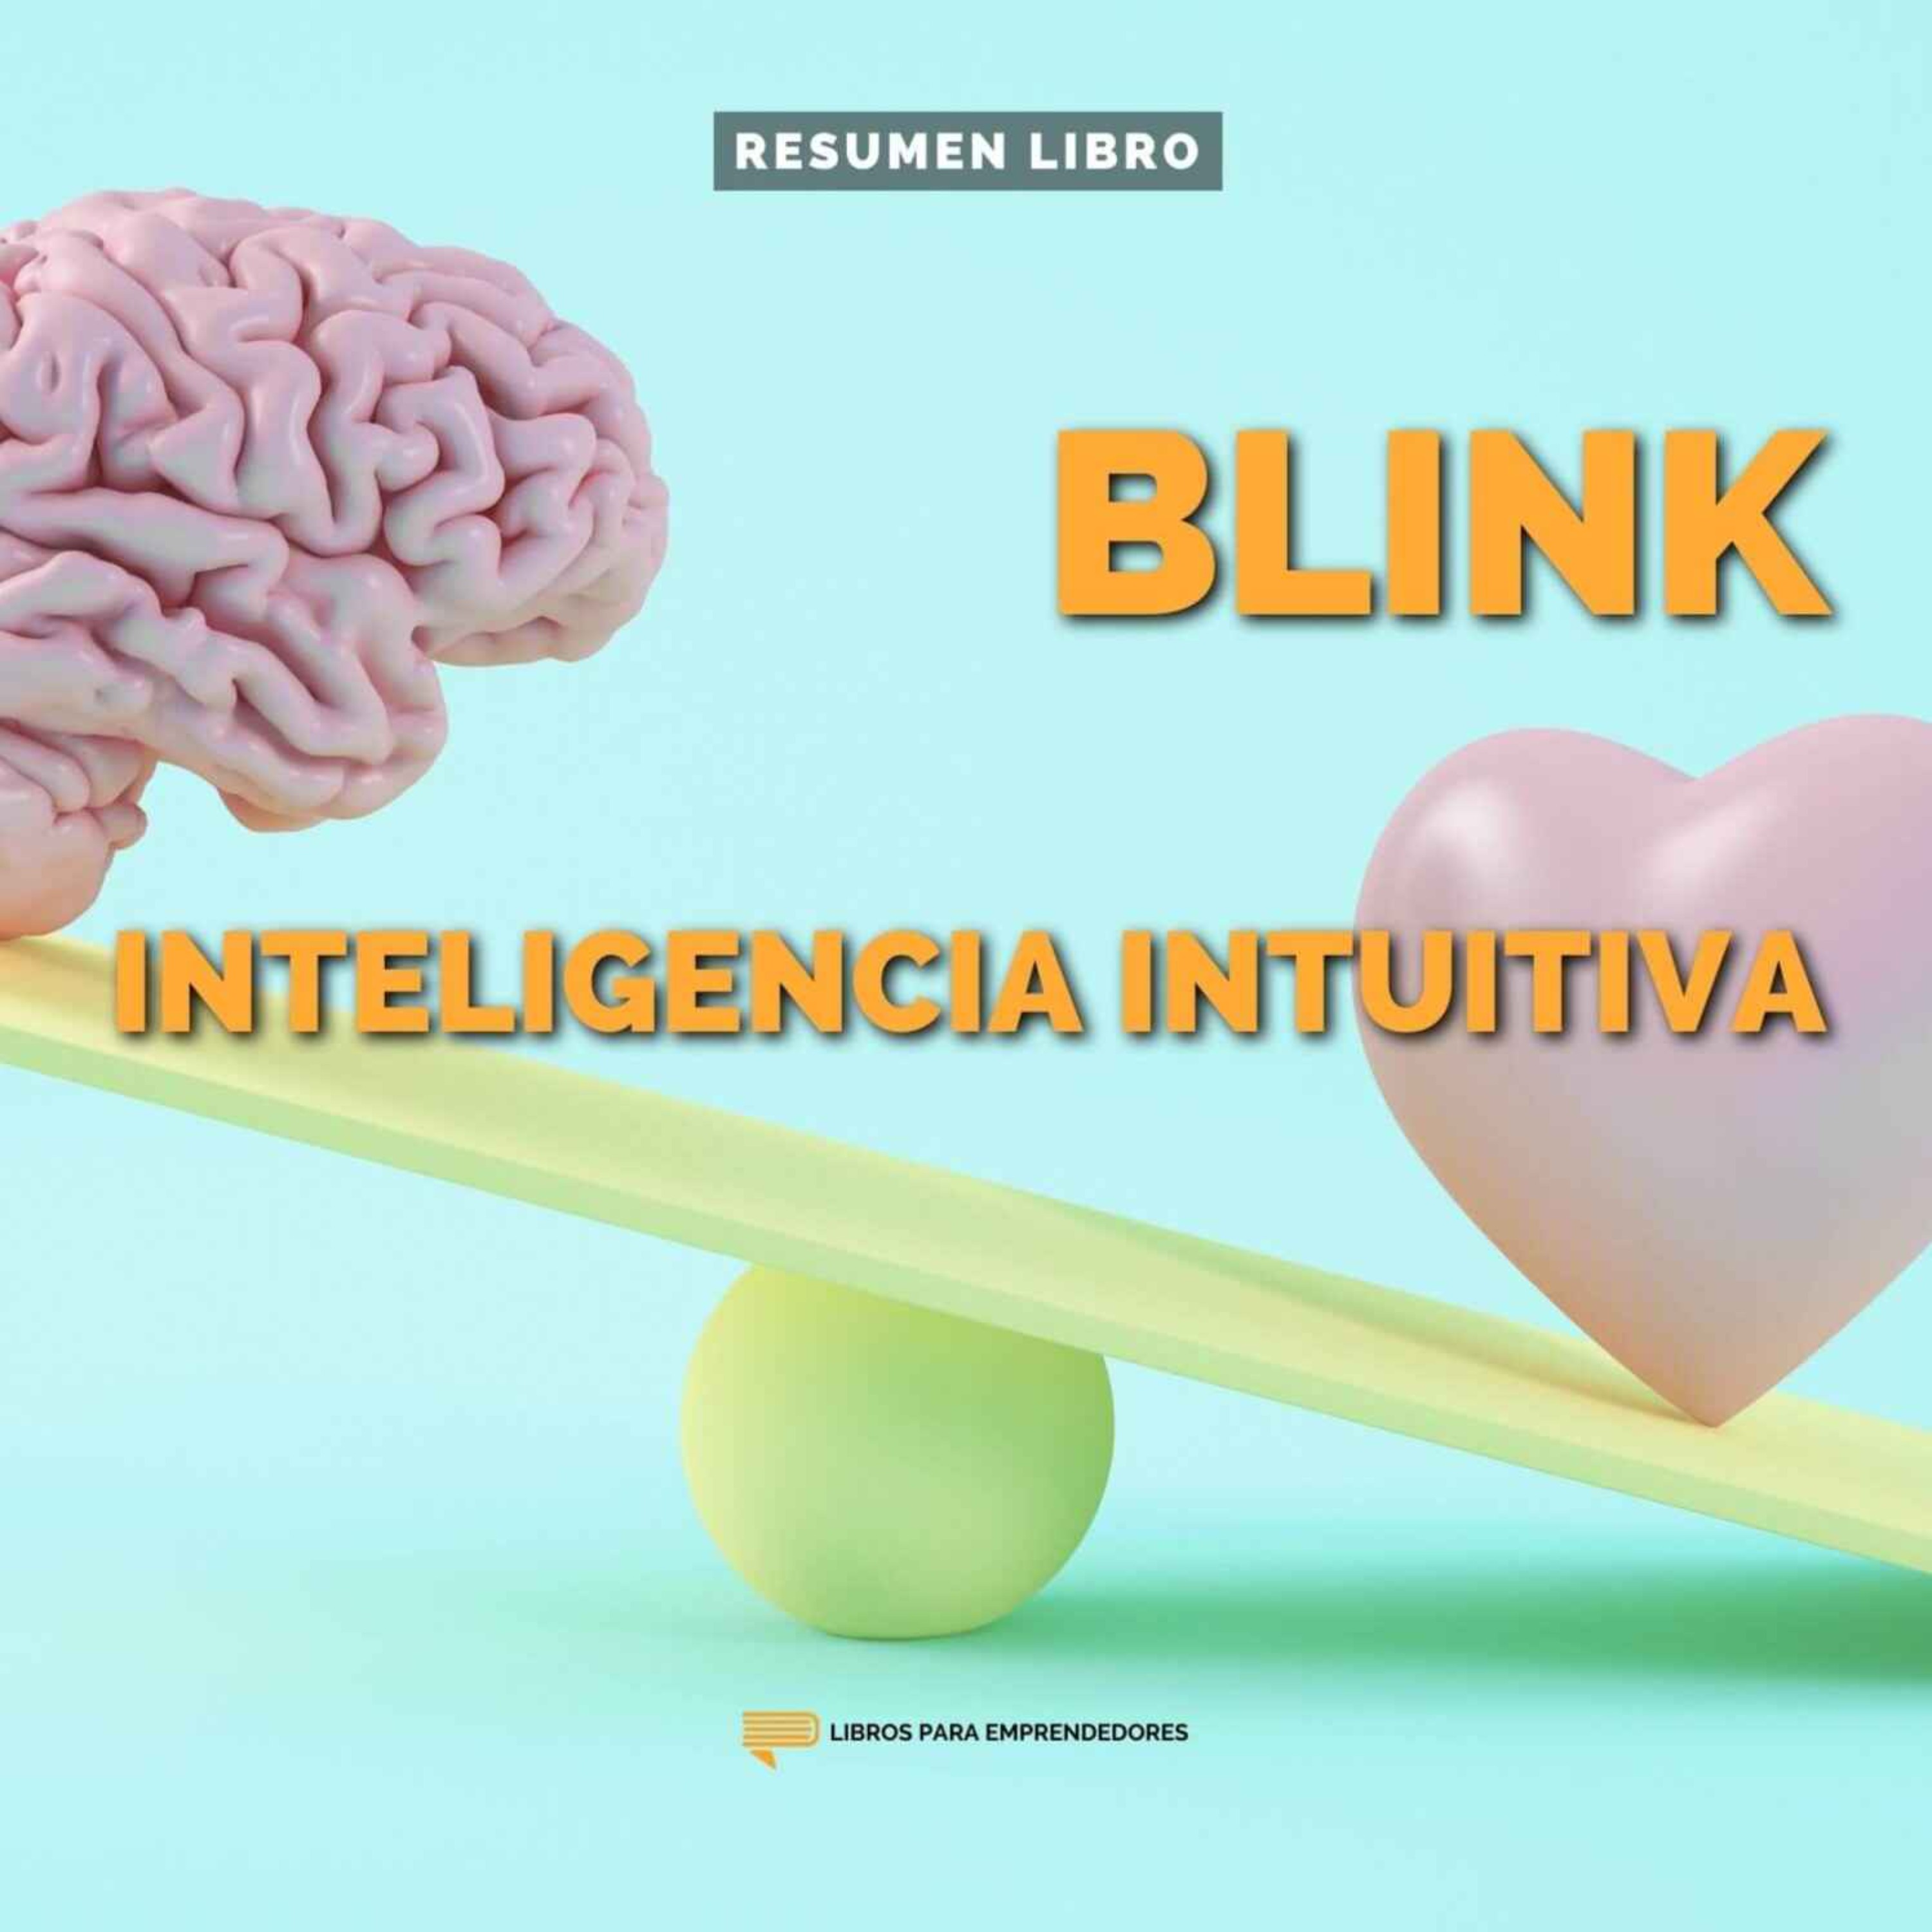 Blink. Inteligencia Intuitiva - Un Resumen de Libros para Emprendedores